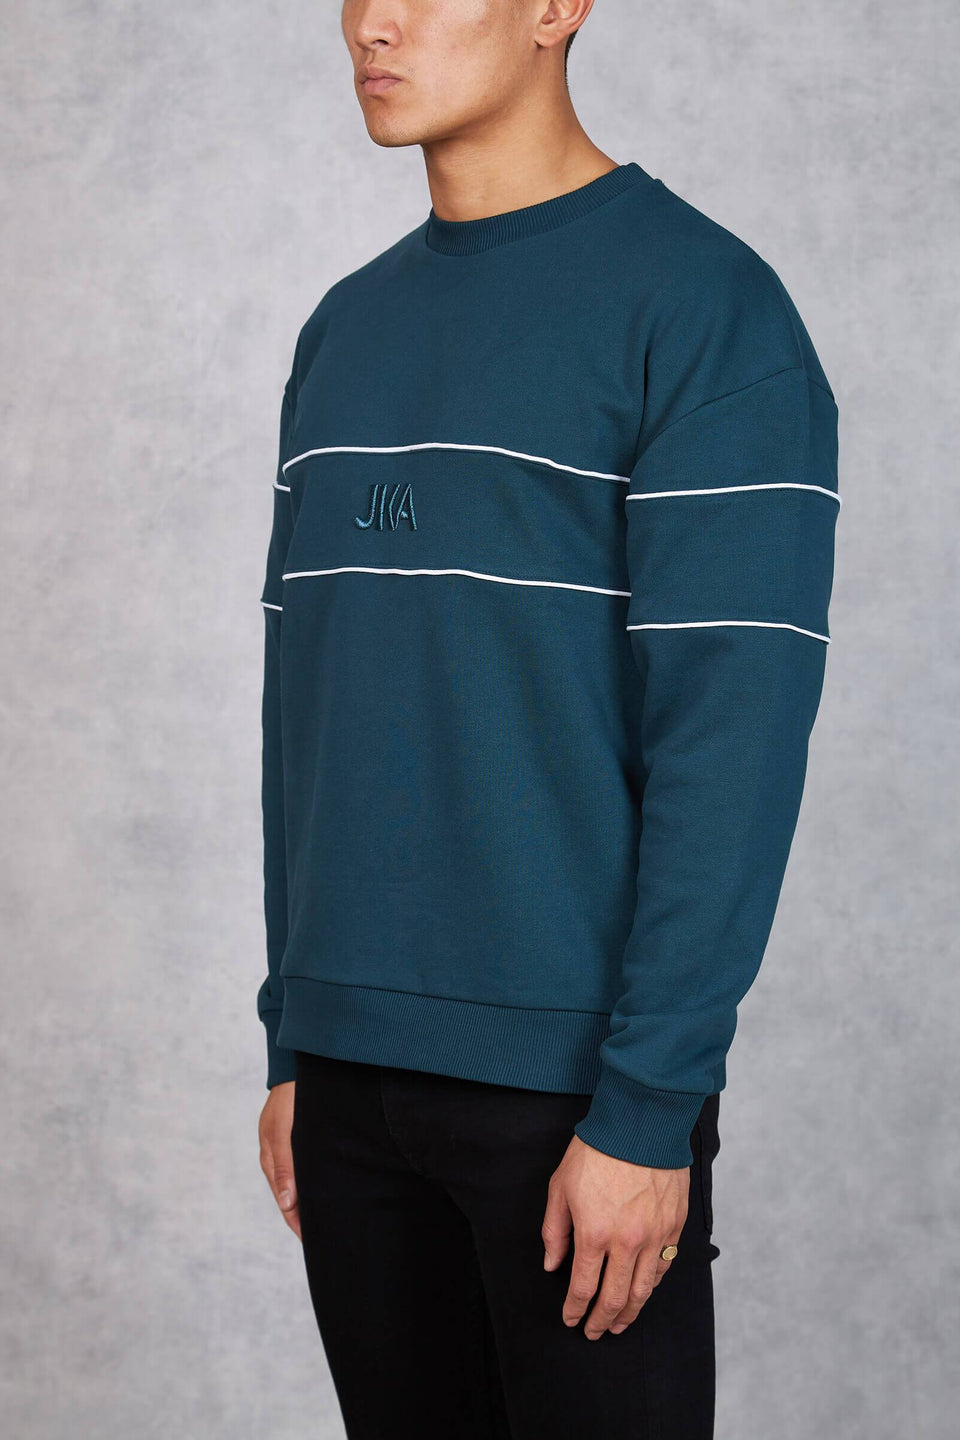 Lincoln Block Sweatshirt - Teal